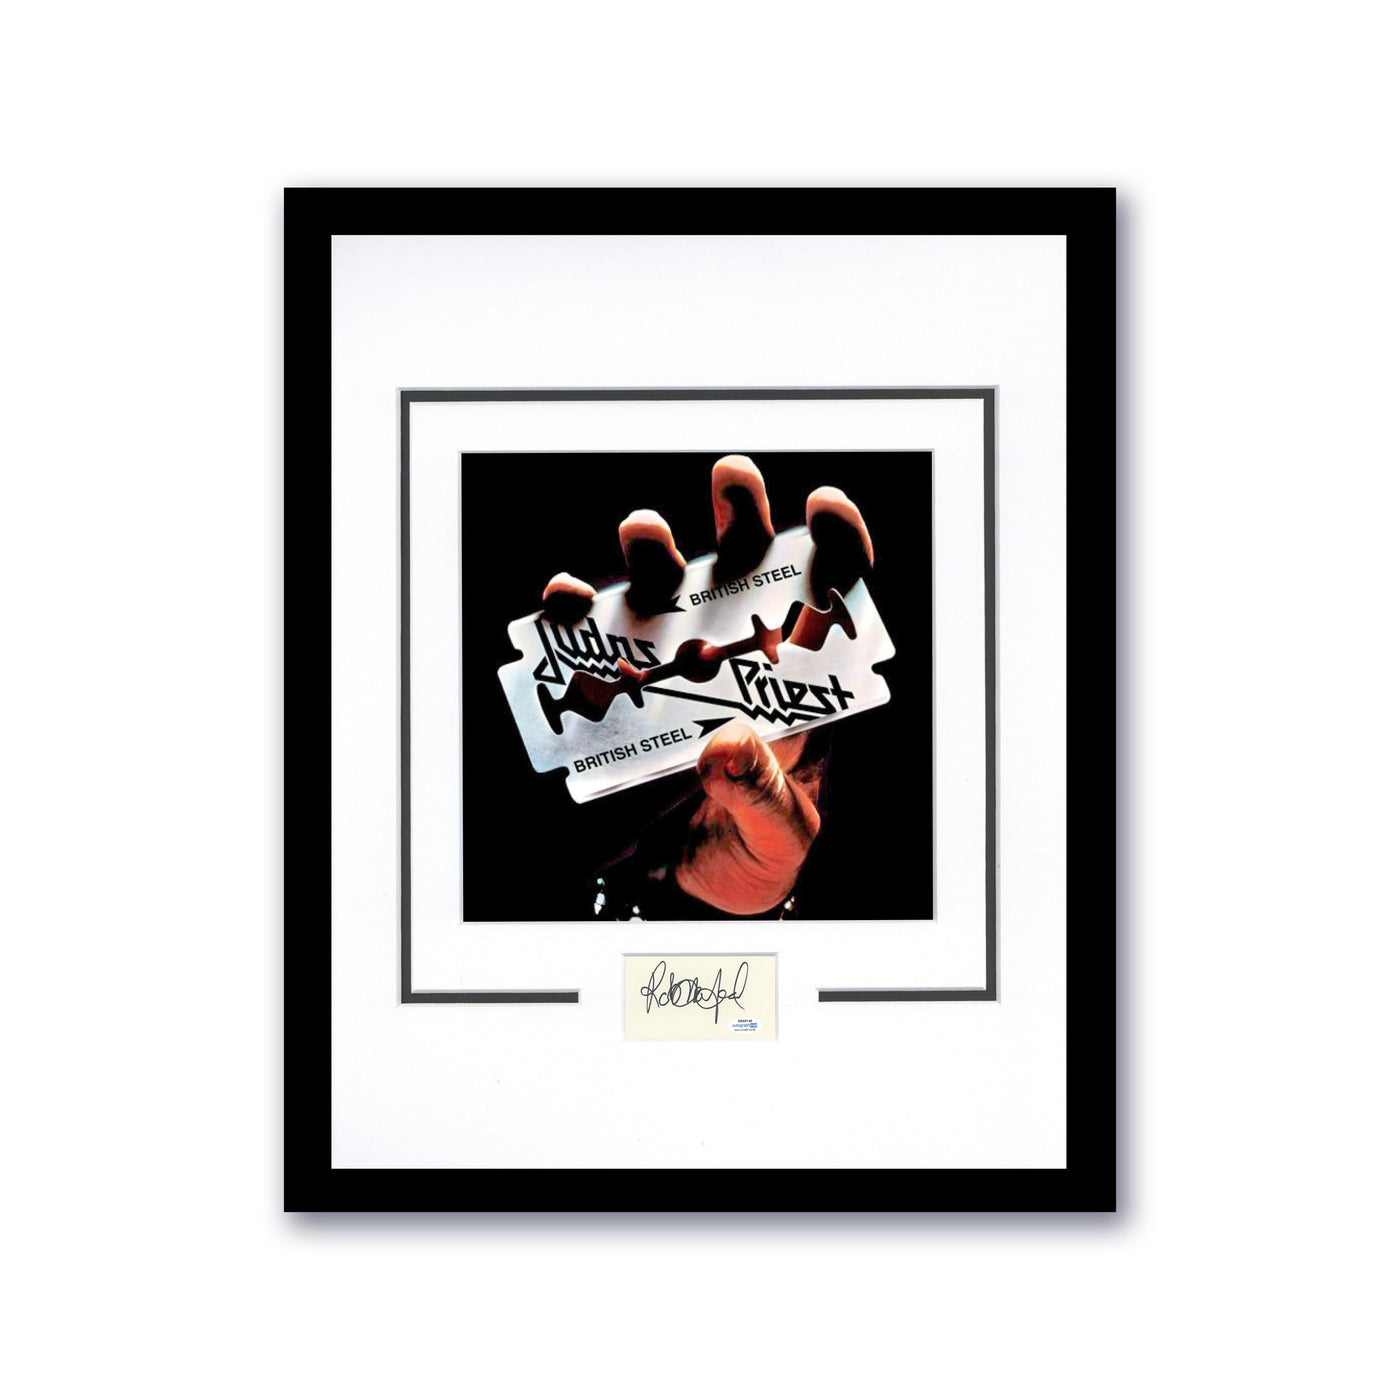 Judas Priest Rob Halford Autograph Signed 11x14 Framed Photo British Steel ACOA